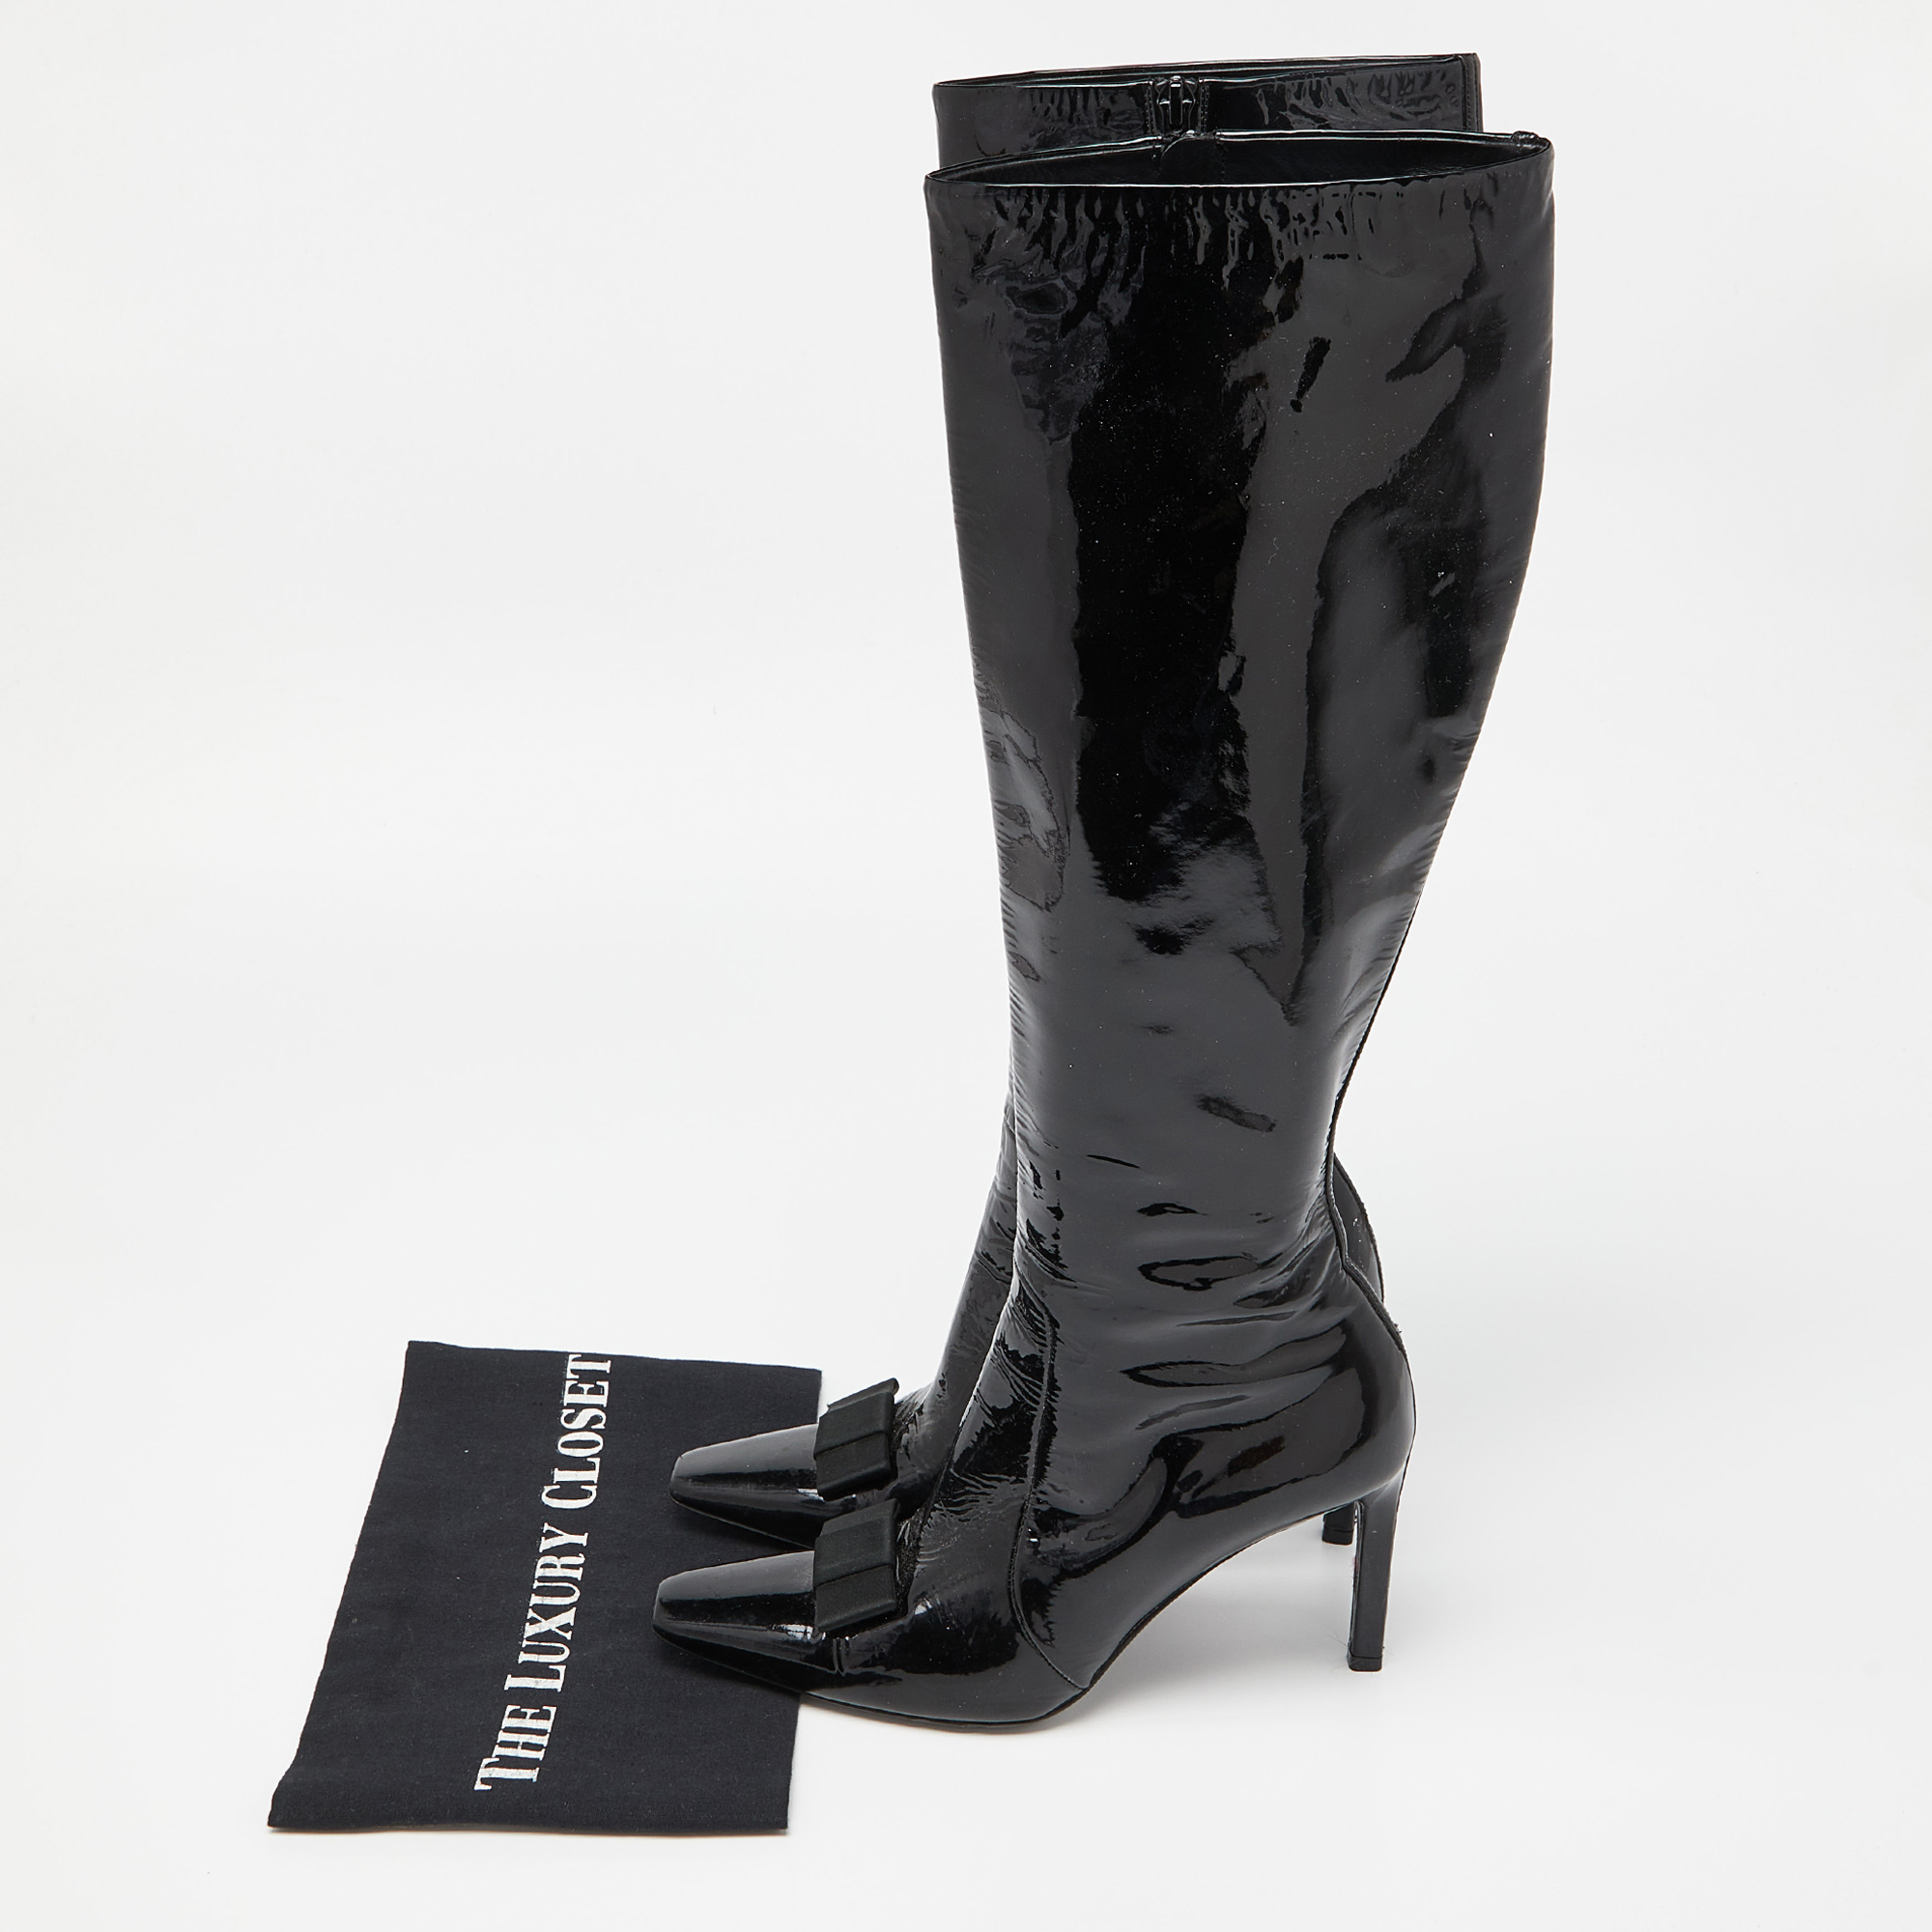 Balenciaga Black Patent Leather Bow Calf Length Boots Size 36